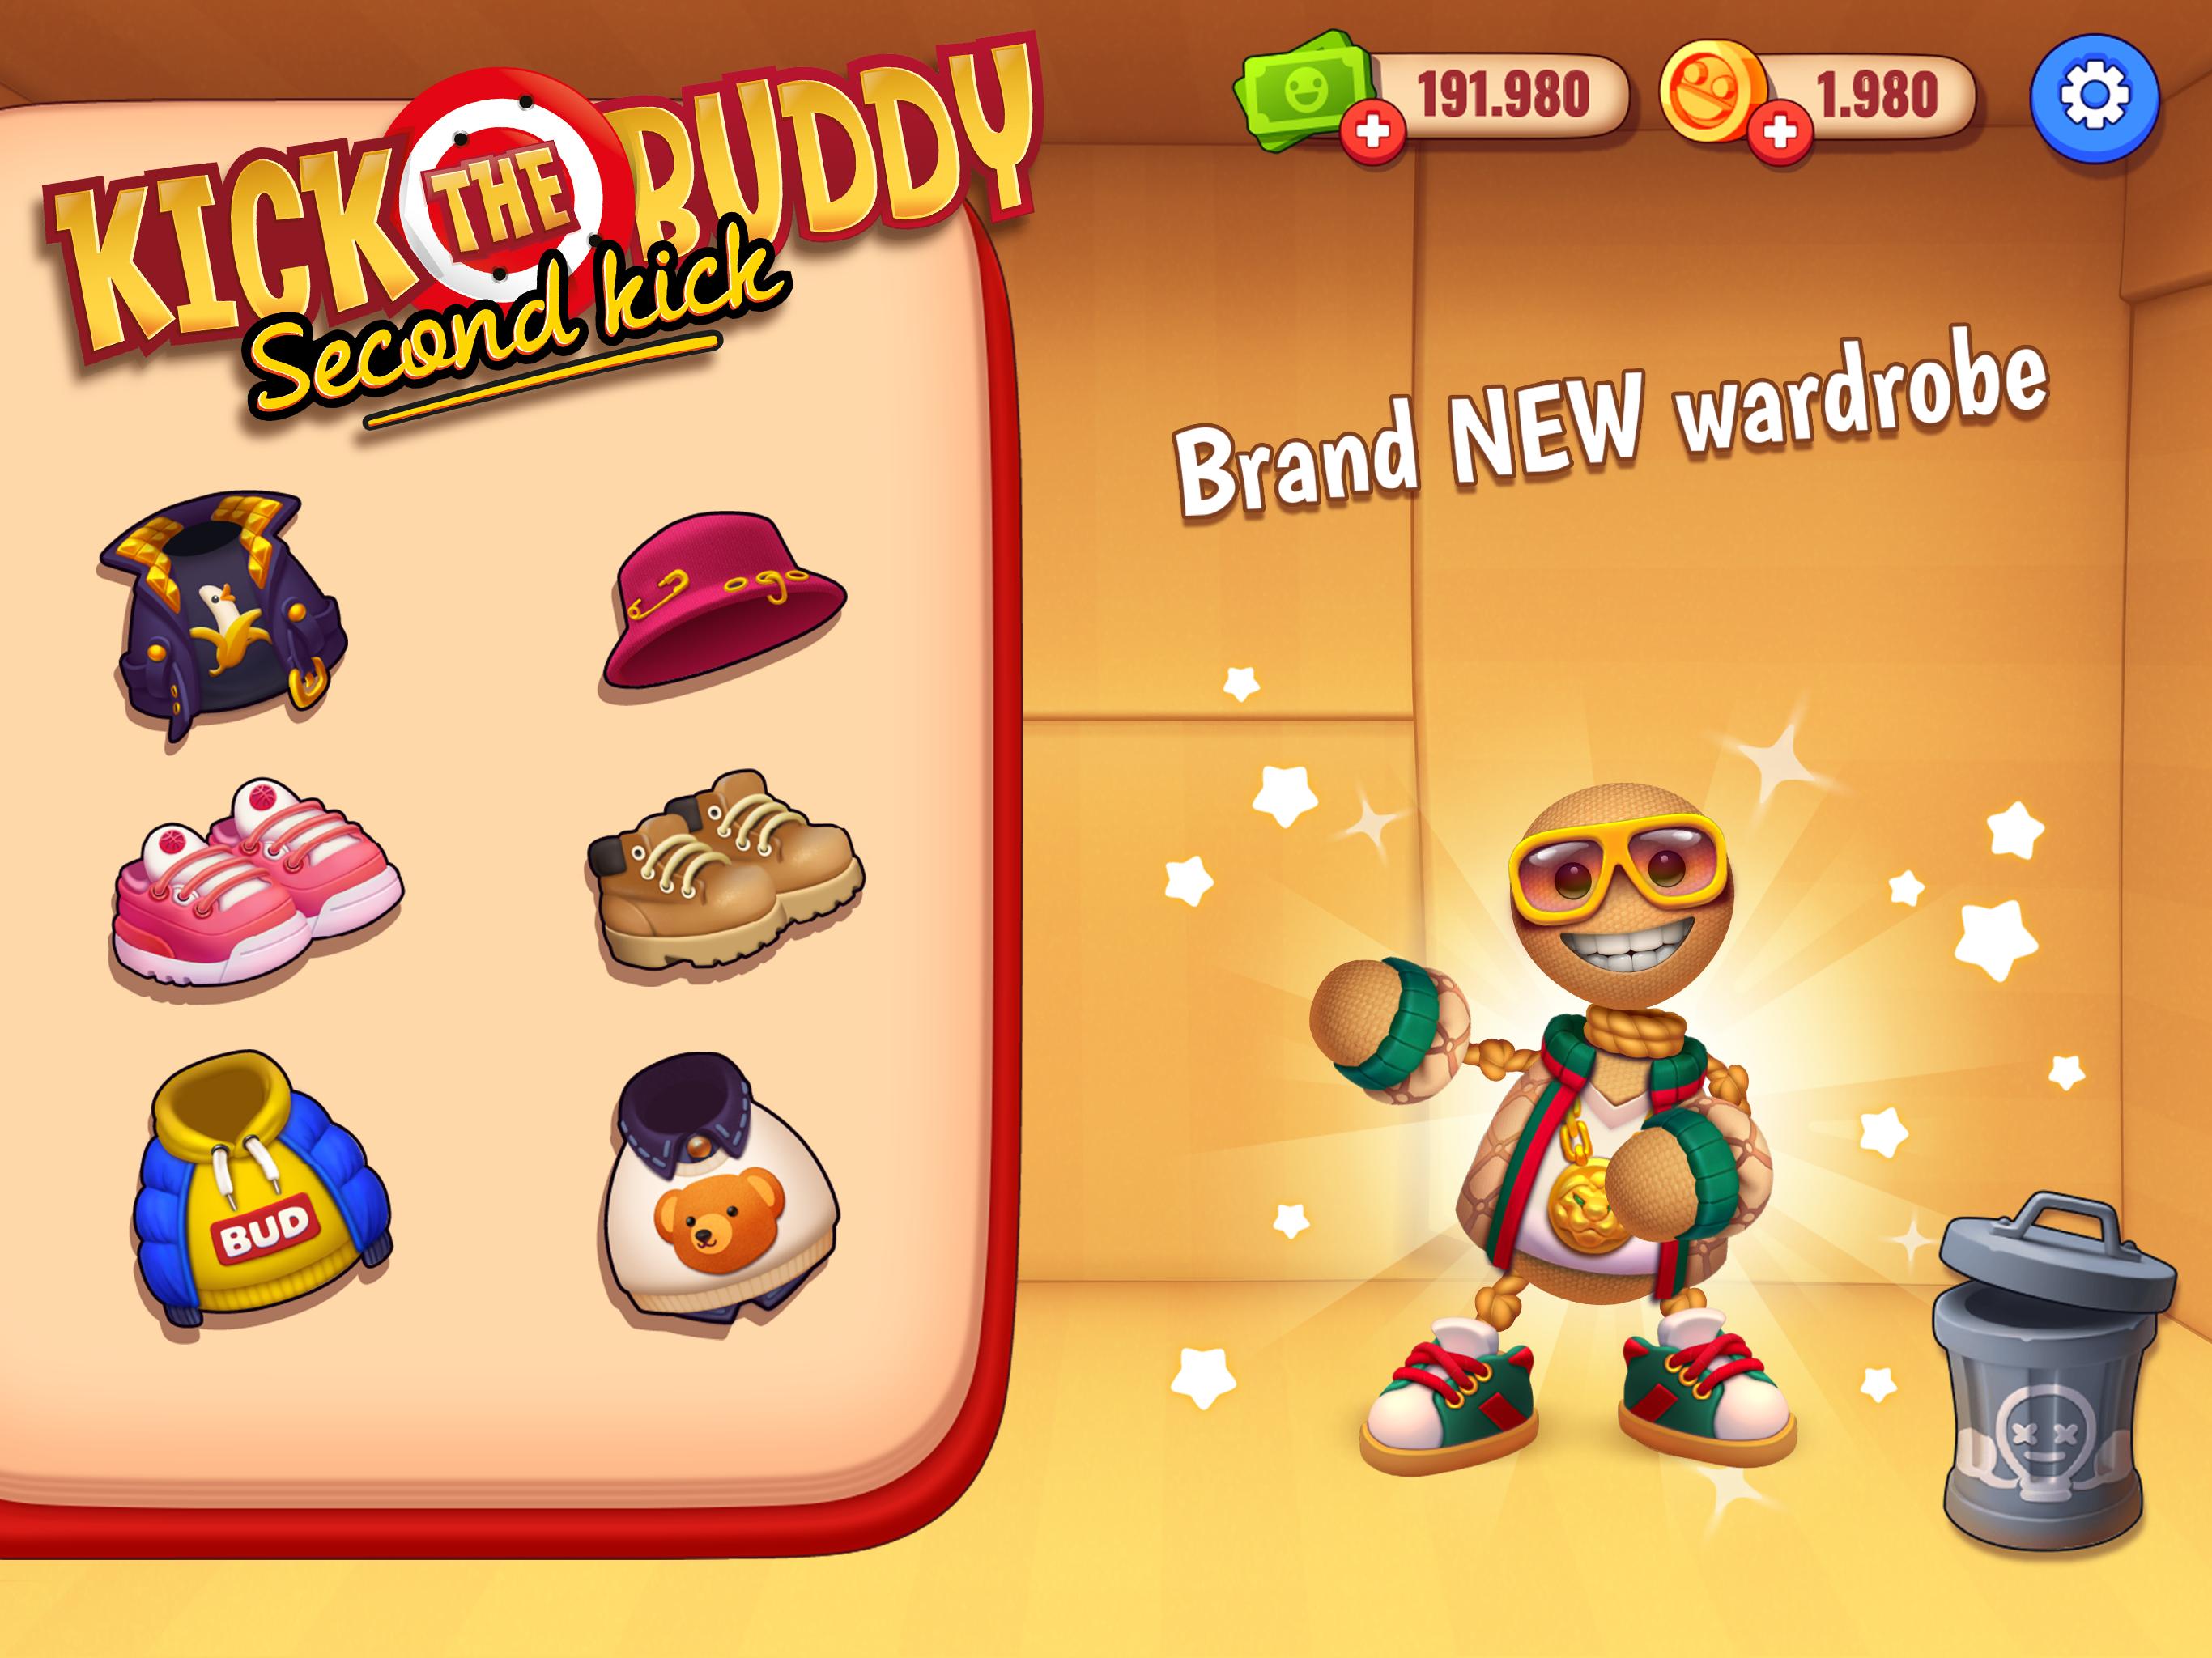 Kick the buddy remastered. Kick the buddy: second Kick Playgendary Limited есть реклама читы. Kick the buddy update Phone.